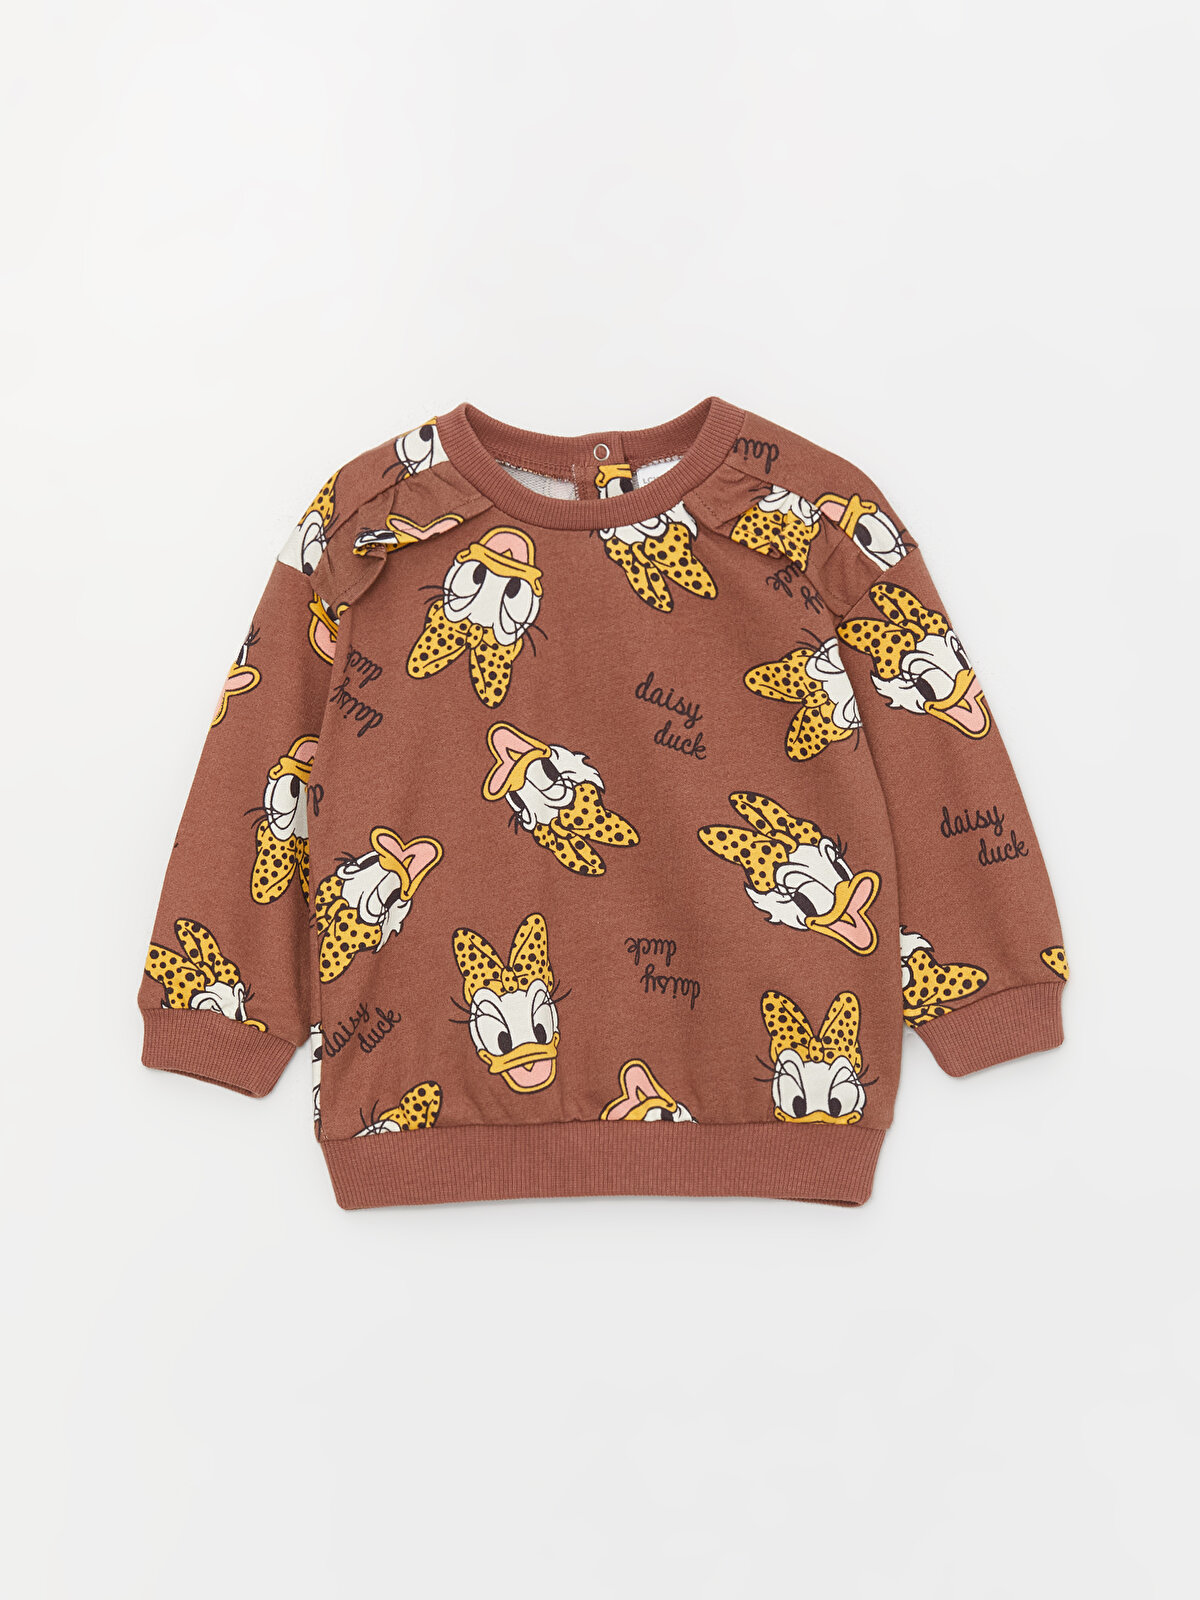 Crew Neck Daisy Duck Printed Long Sleeve Baby Girl Sweatshirt 